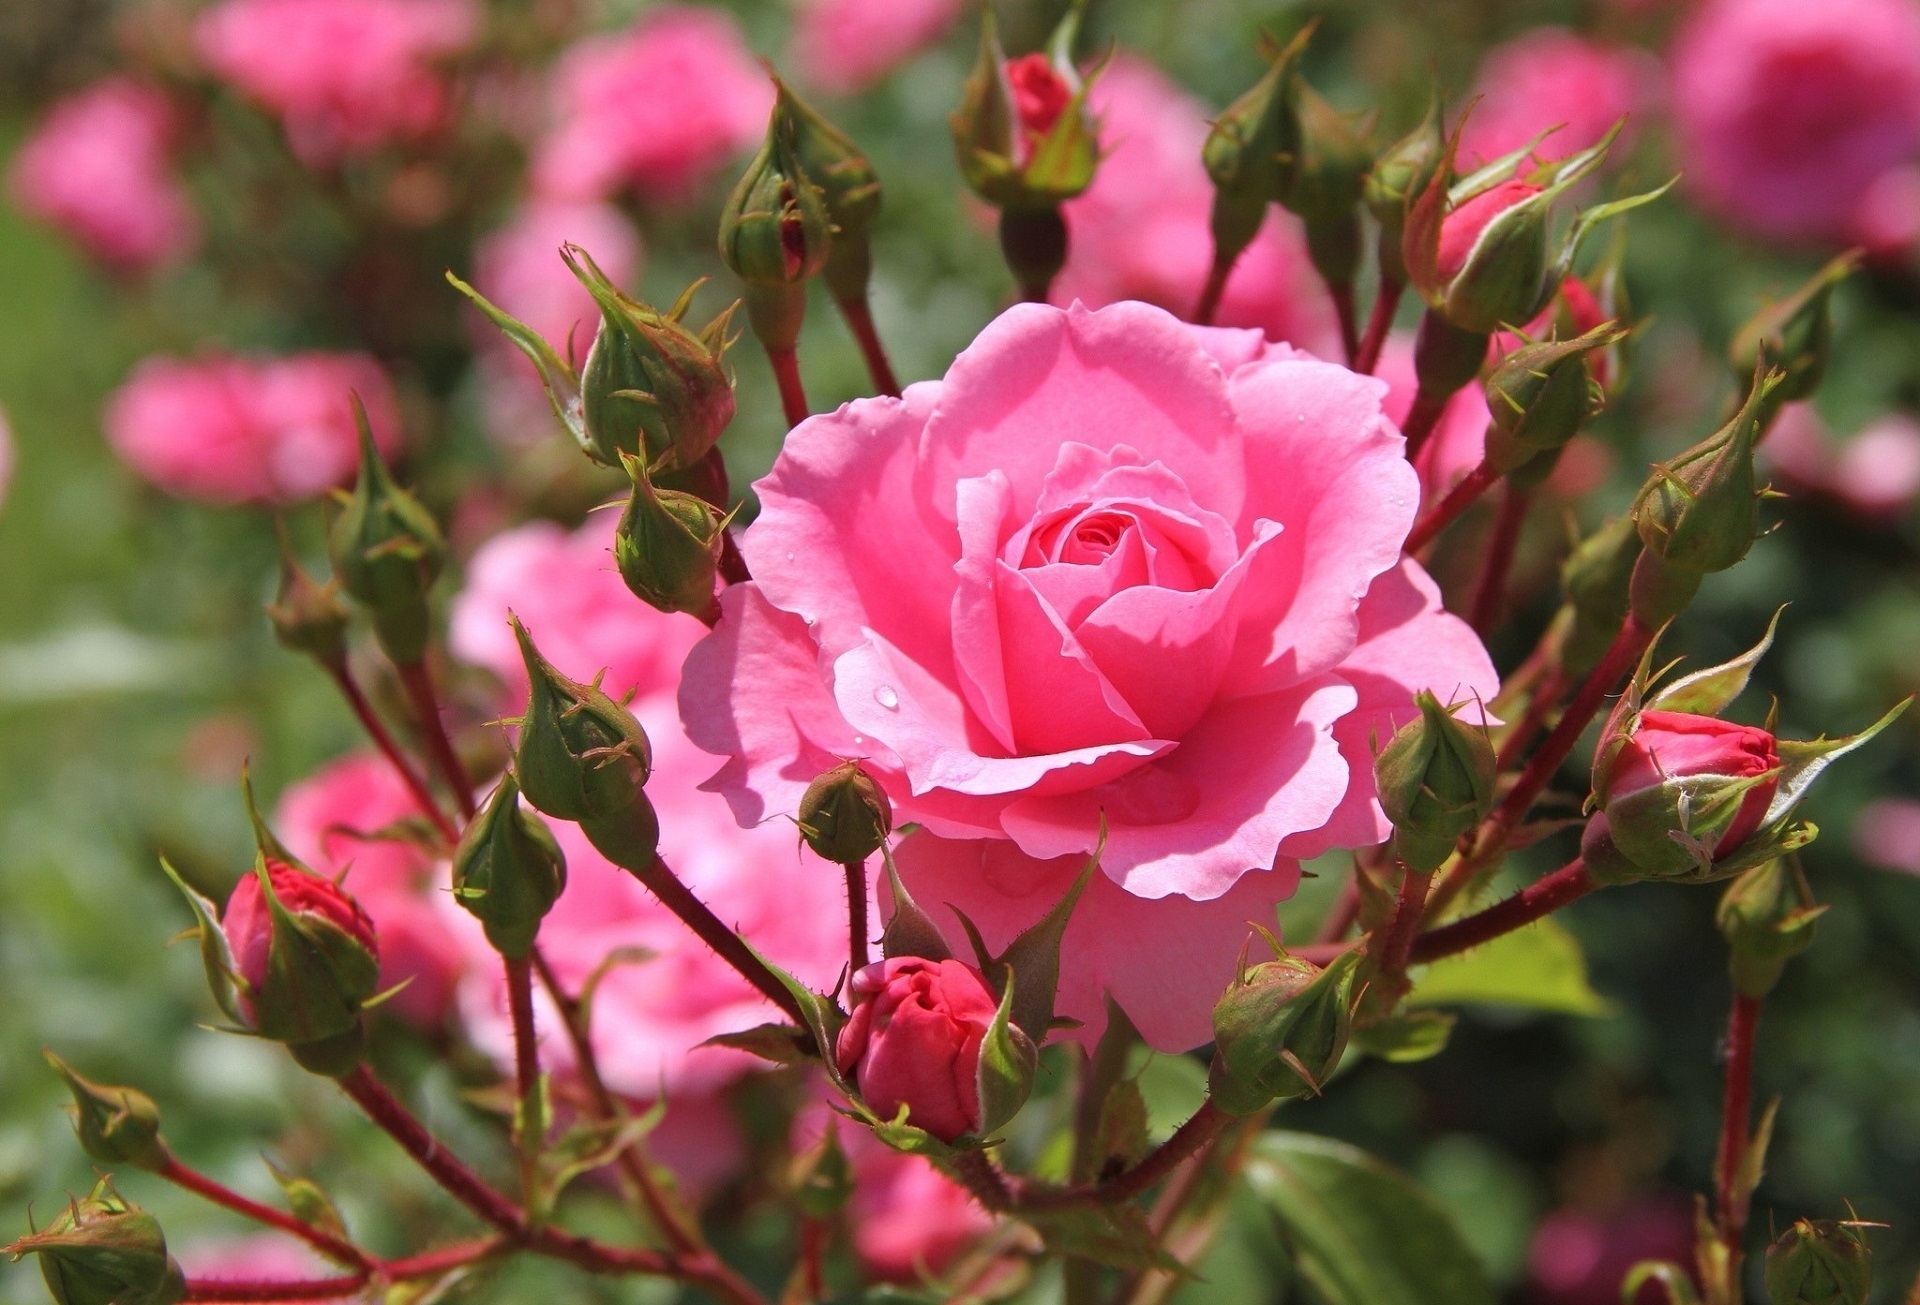 Pink rose in full bloom